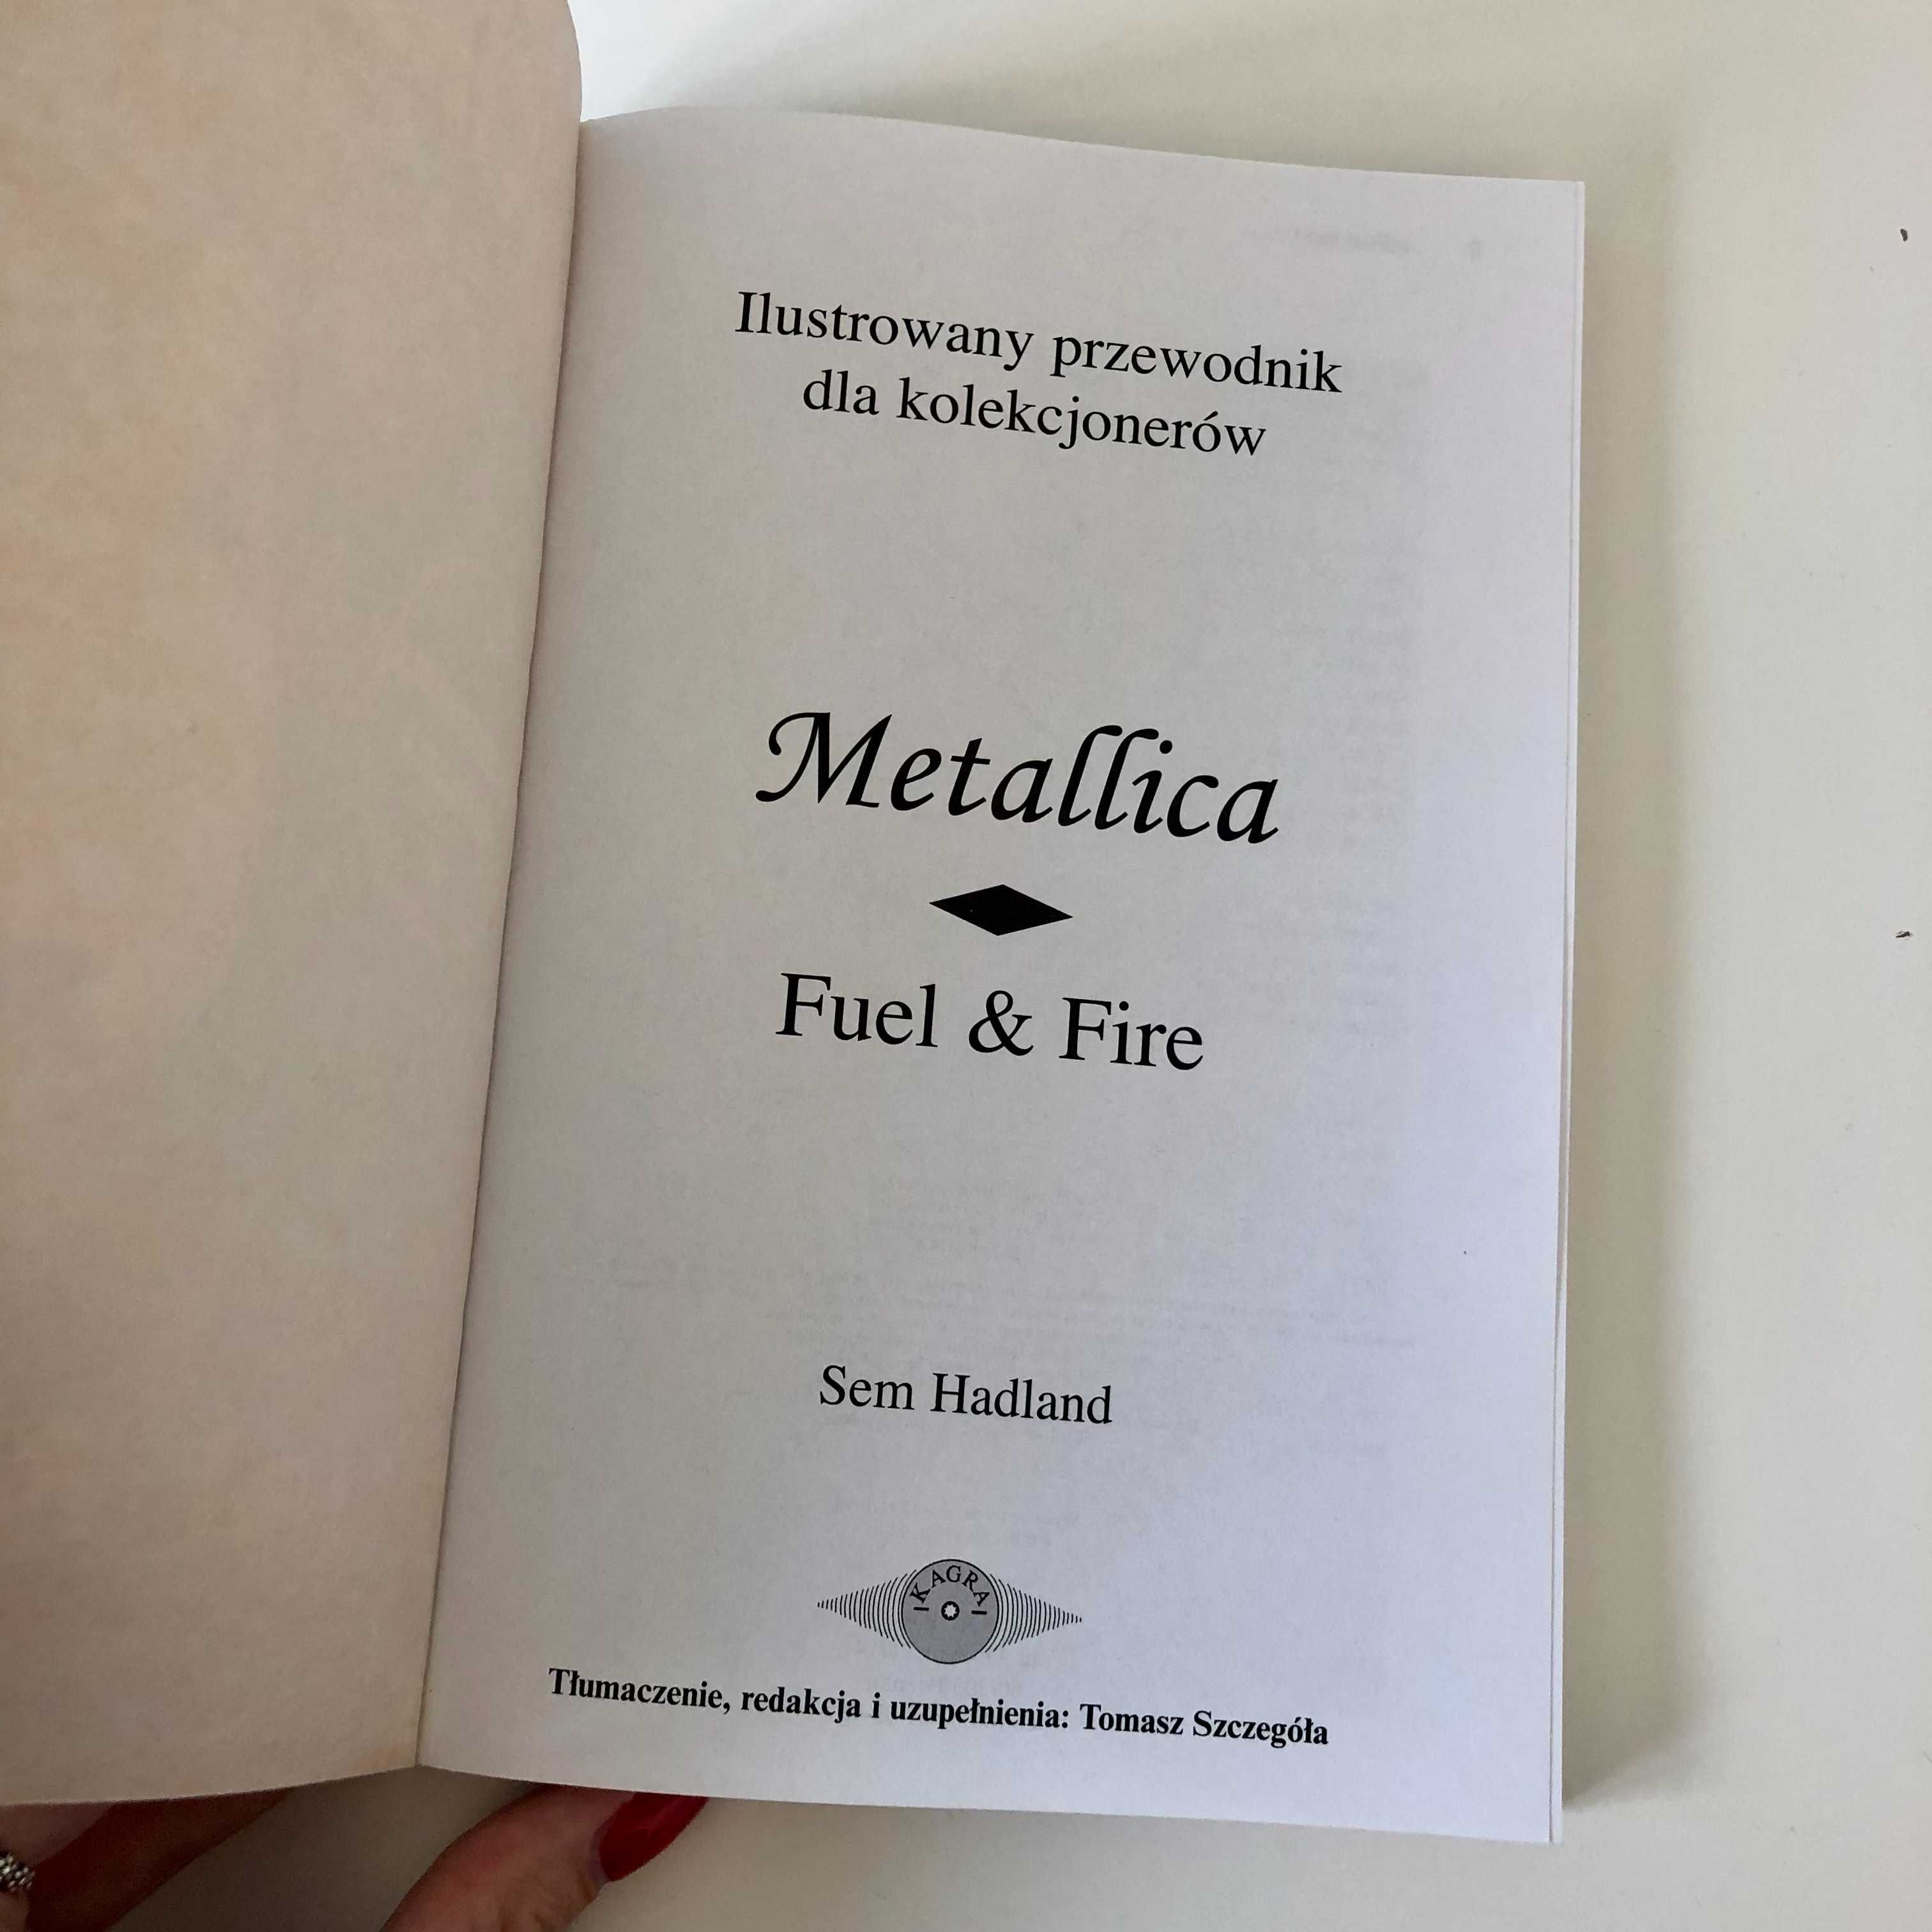 Encyklopedia METALLICA "Fuel & Fire" Sem Hadland 1998